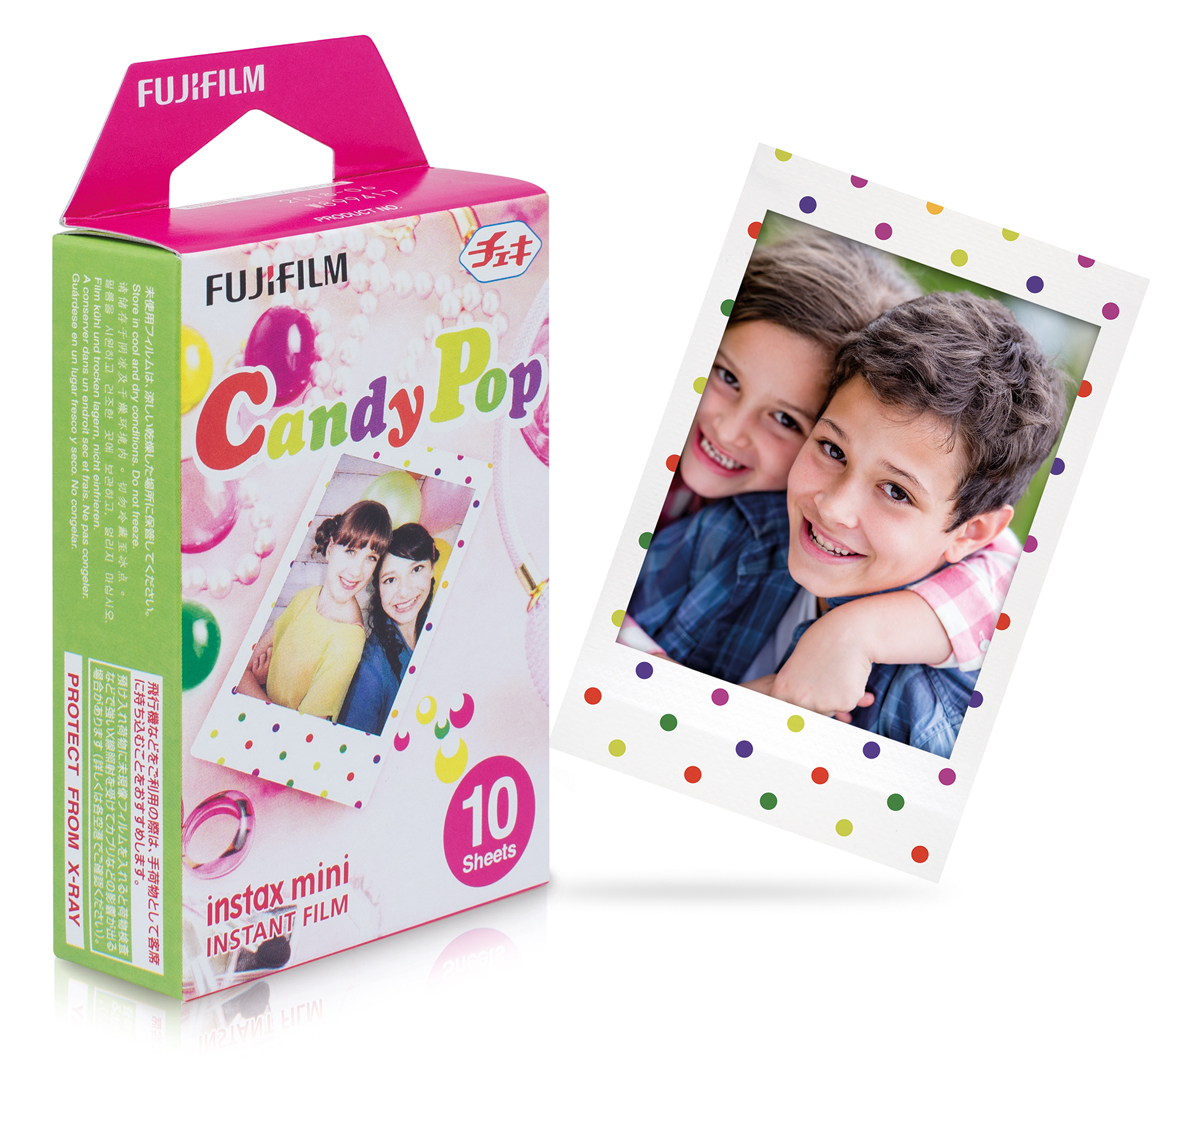 Fujifilm instax mini film candypop